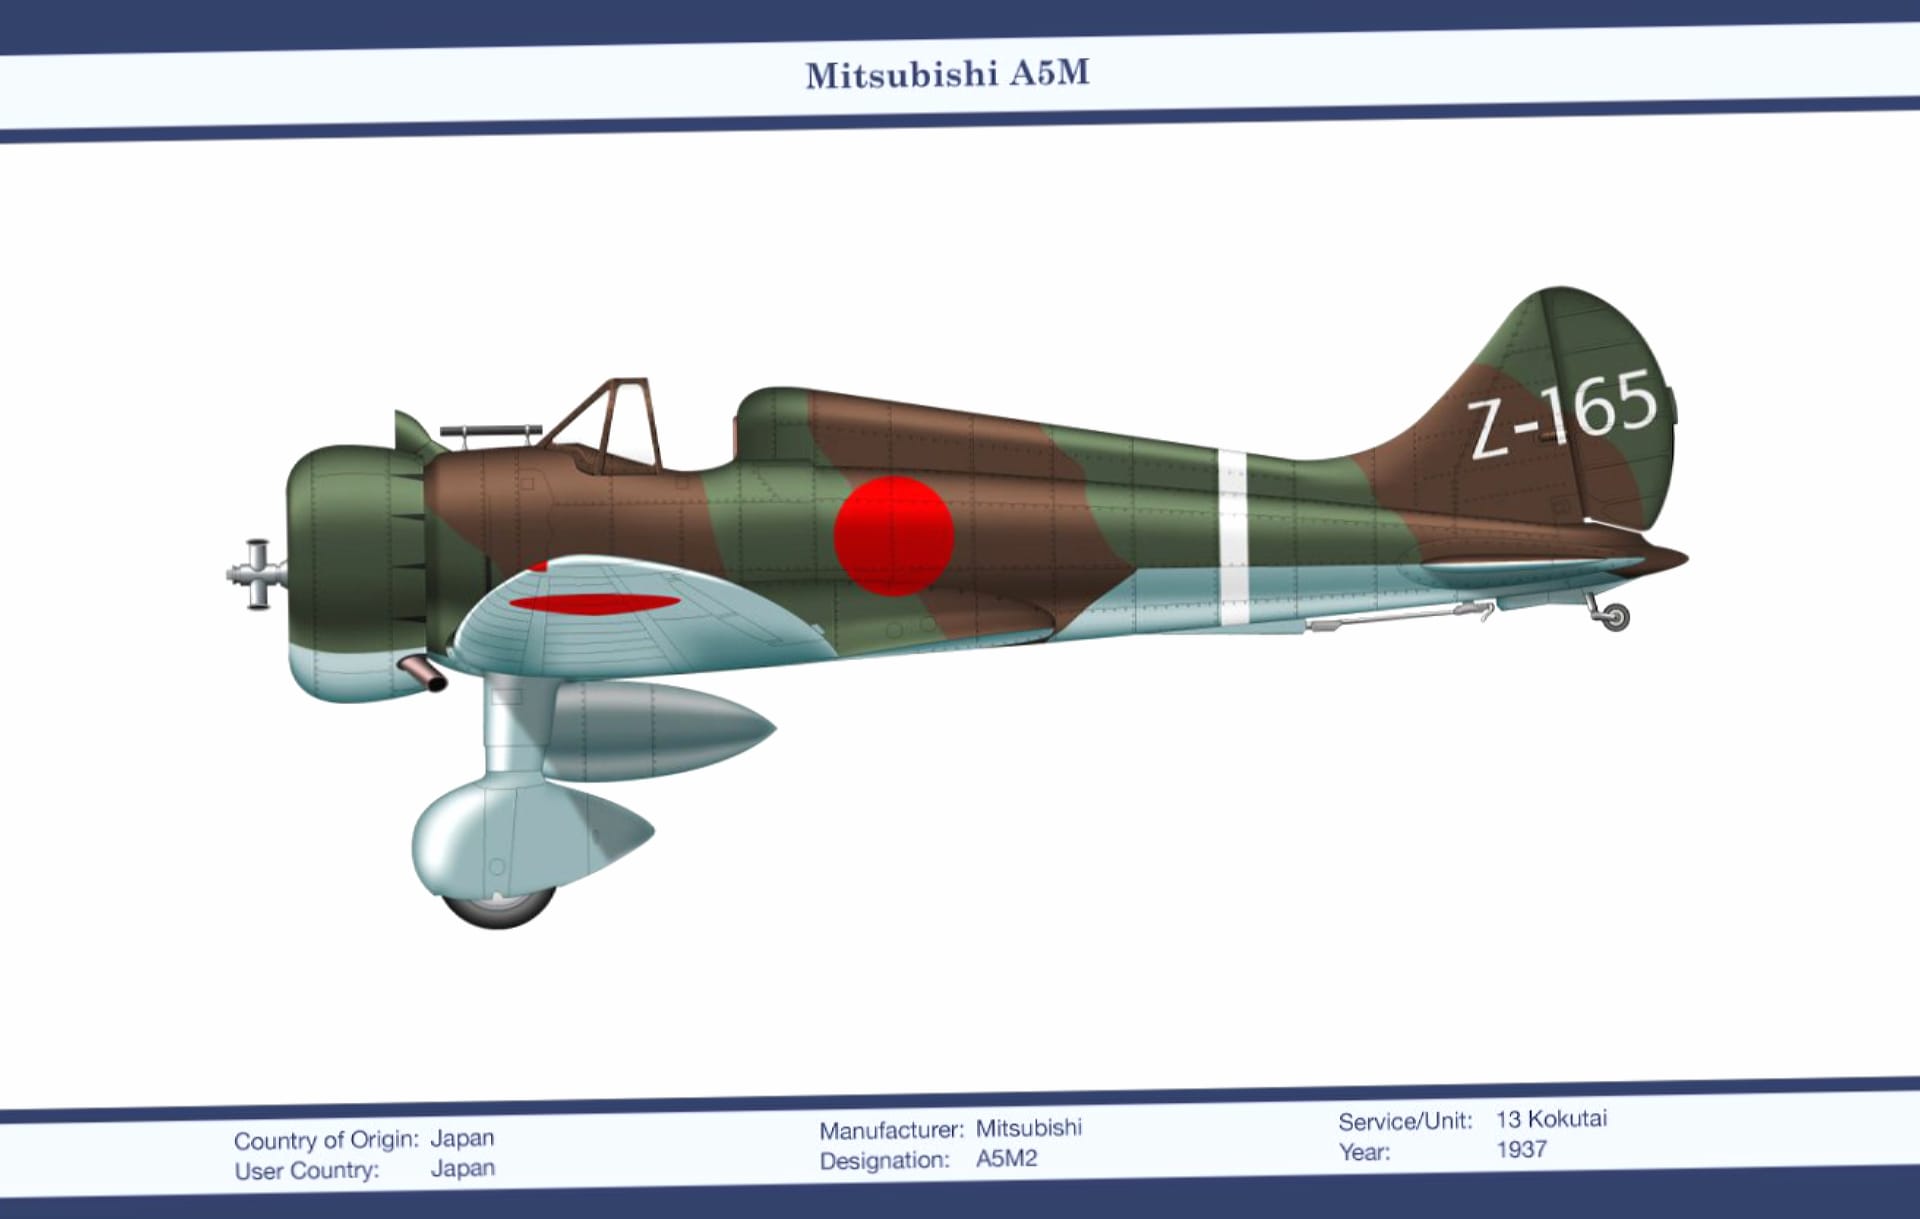 Mitsubishi A5M at 2048 x 2048 iPad size wallpapers HD quality